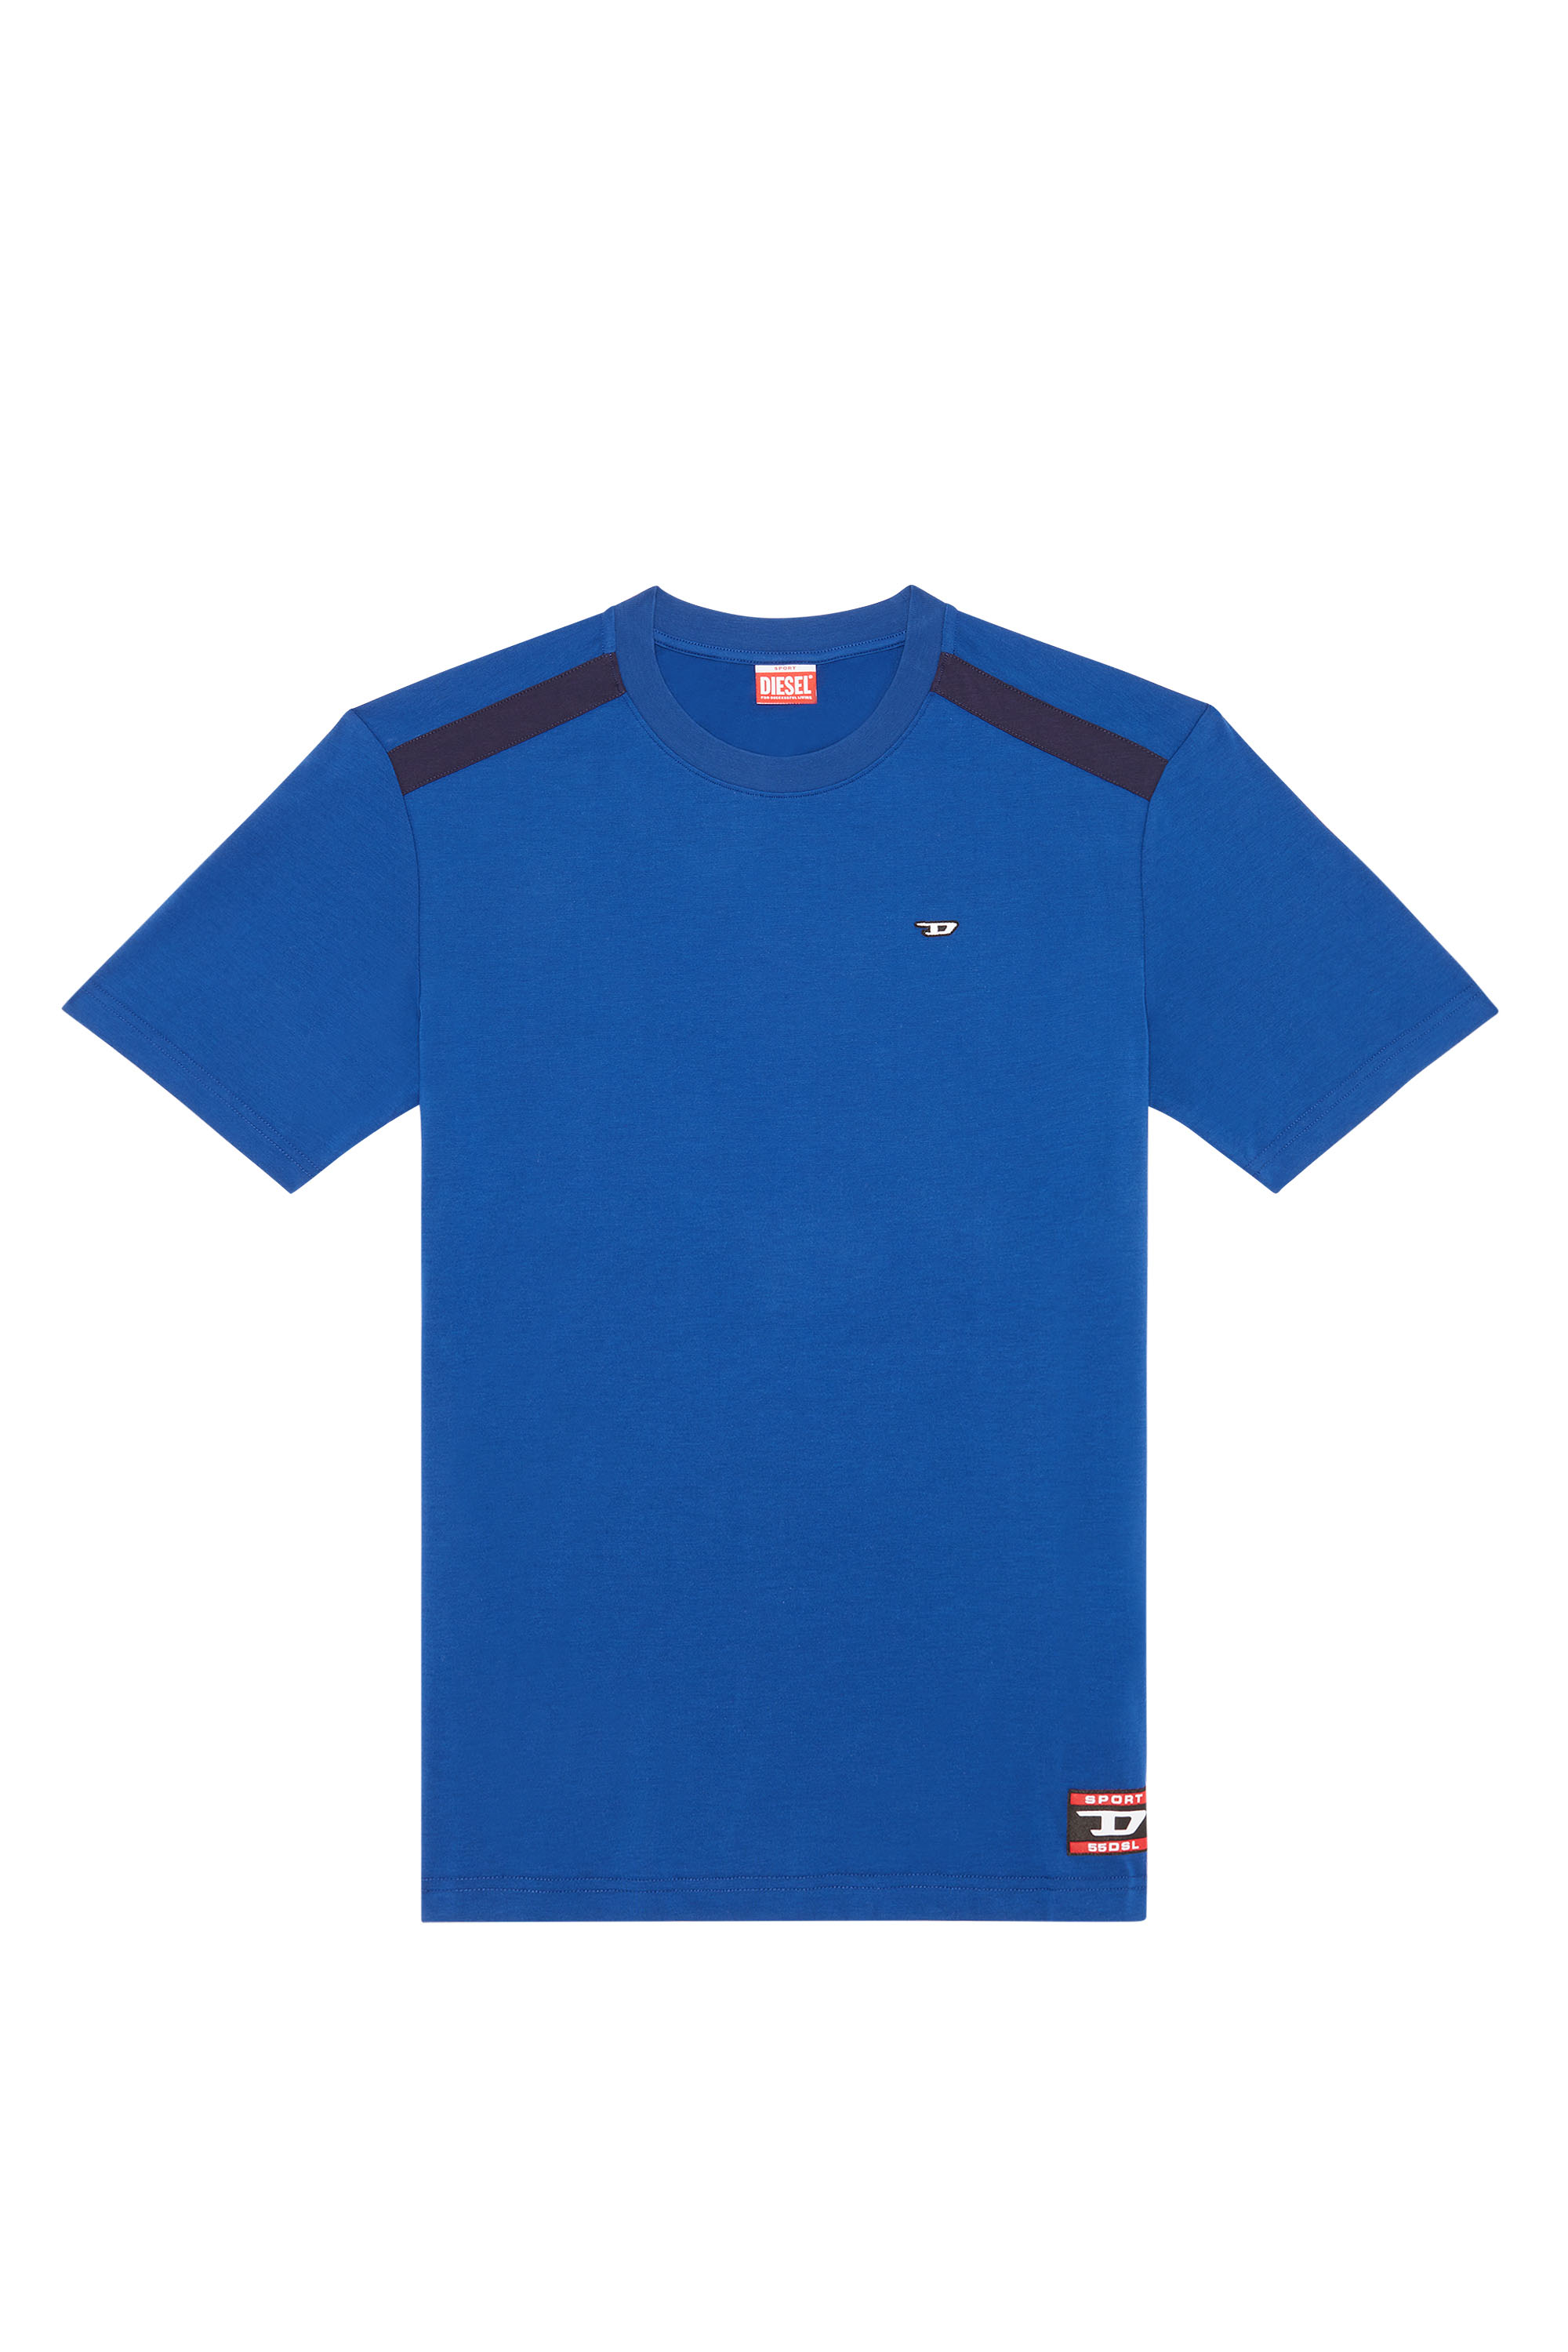 AMTEE-FREASTY-HT04, Blue - T-Shirts